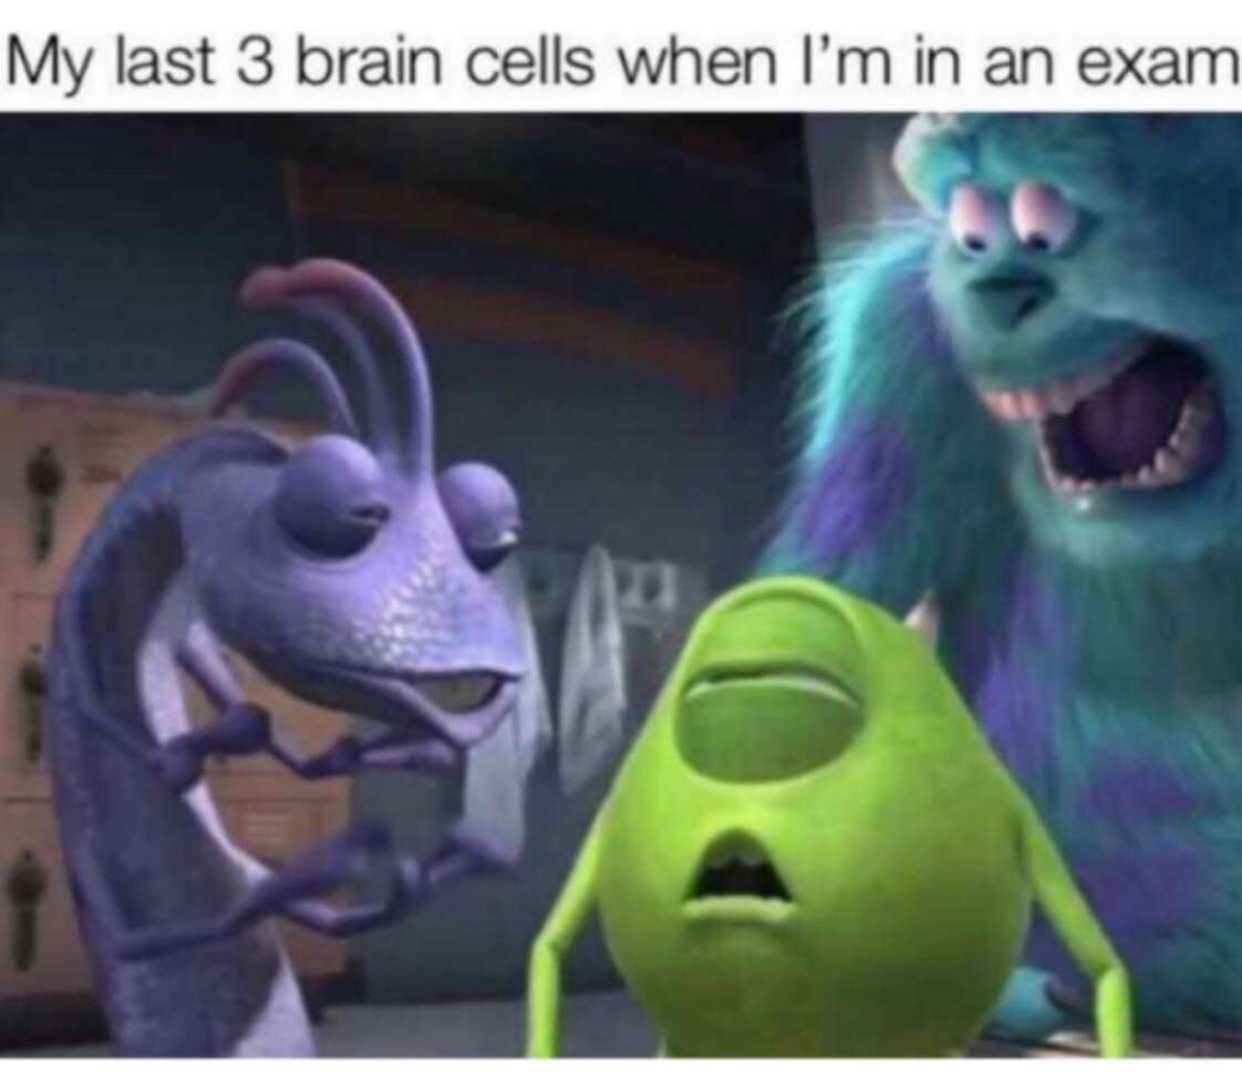 the last 3 brain cells - meme